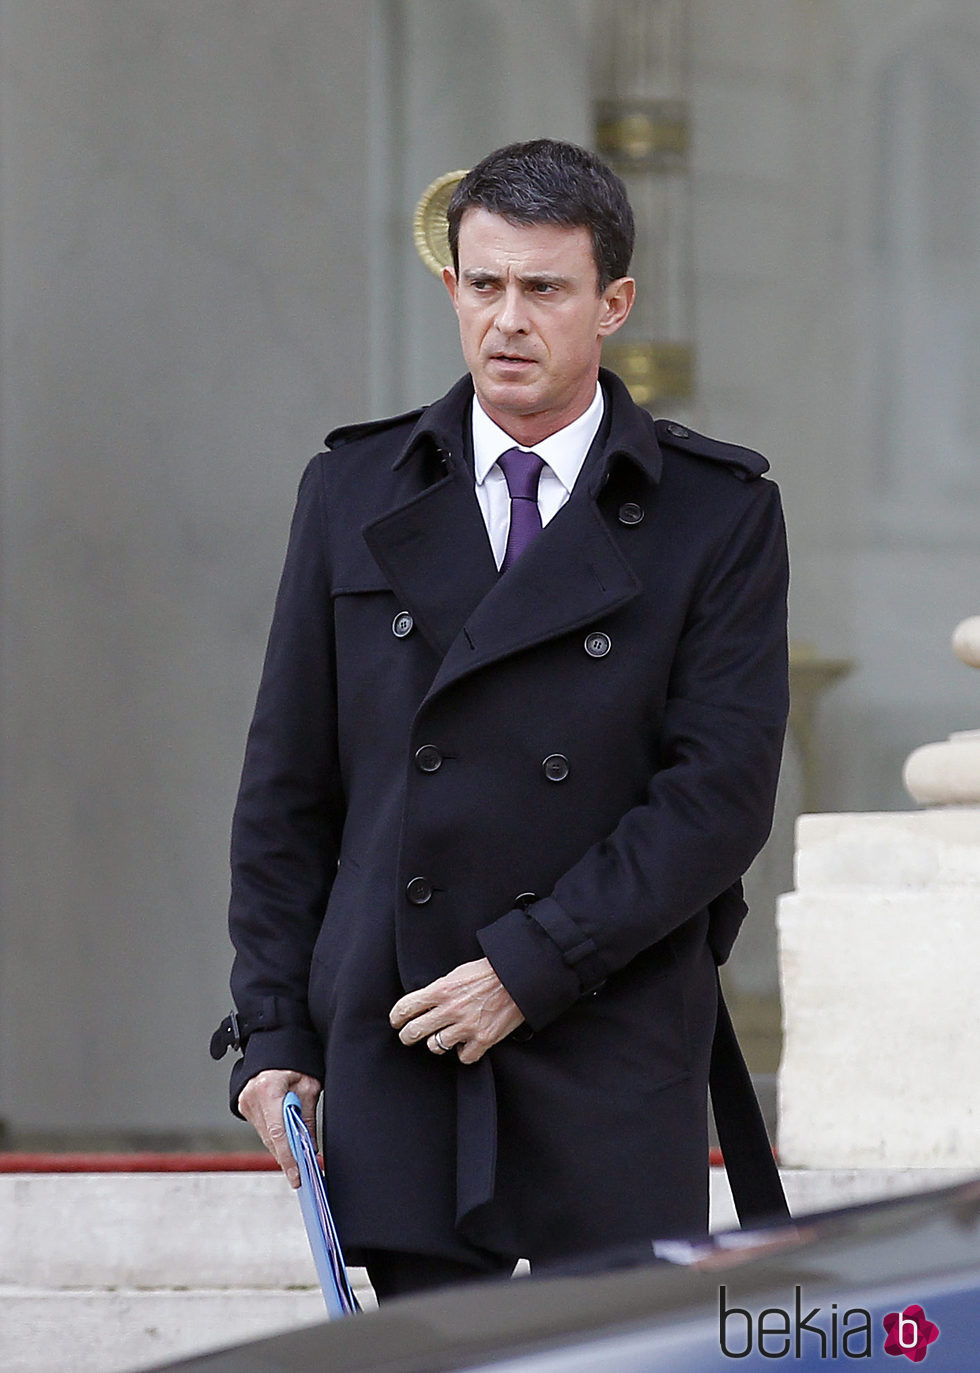 Manuel Valls en un Consejo de Ministros